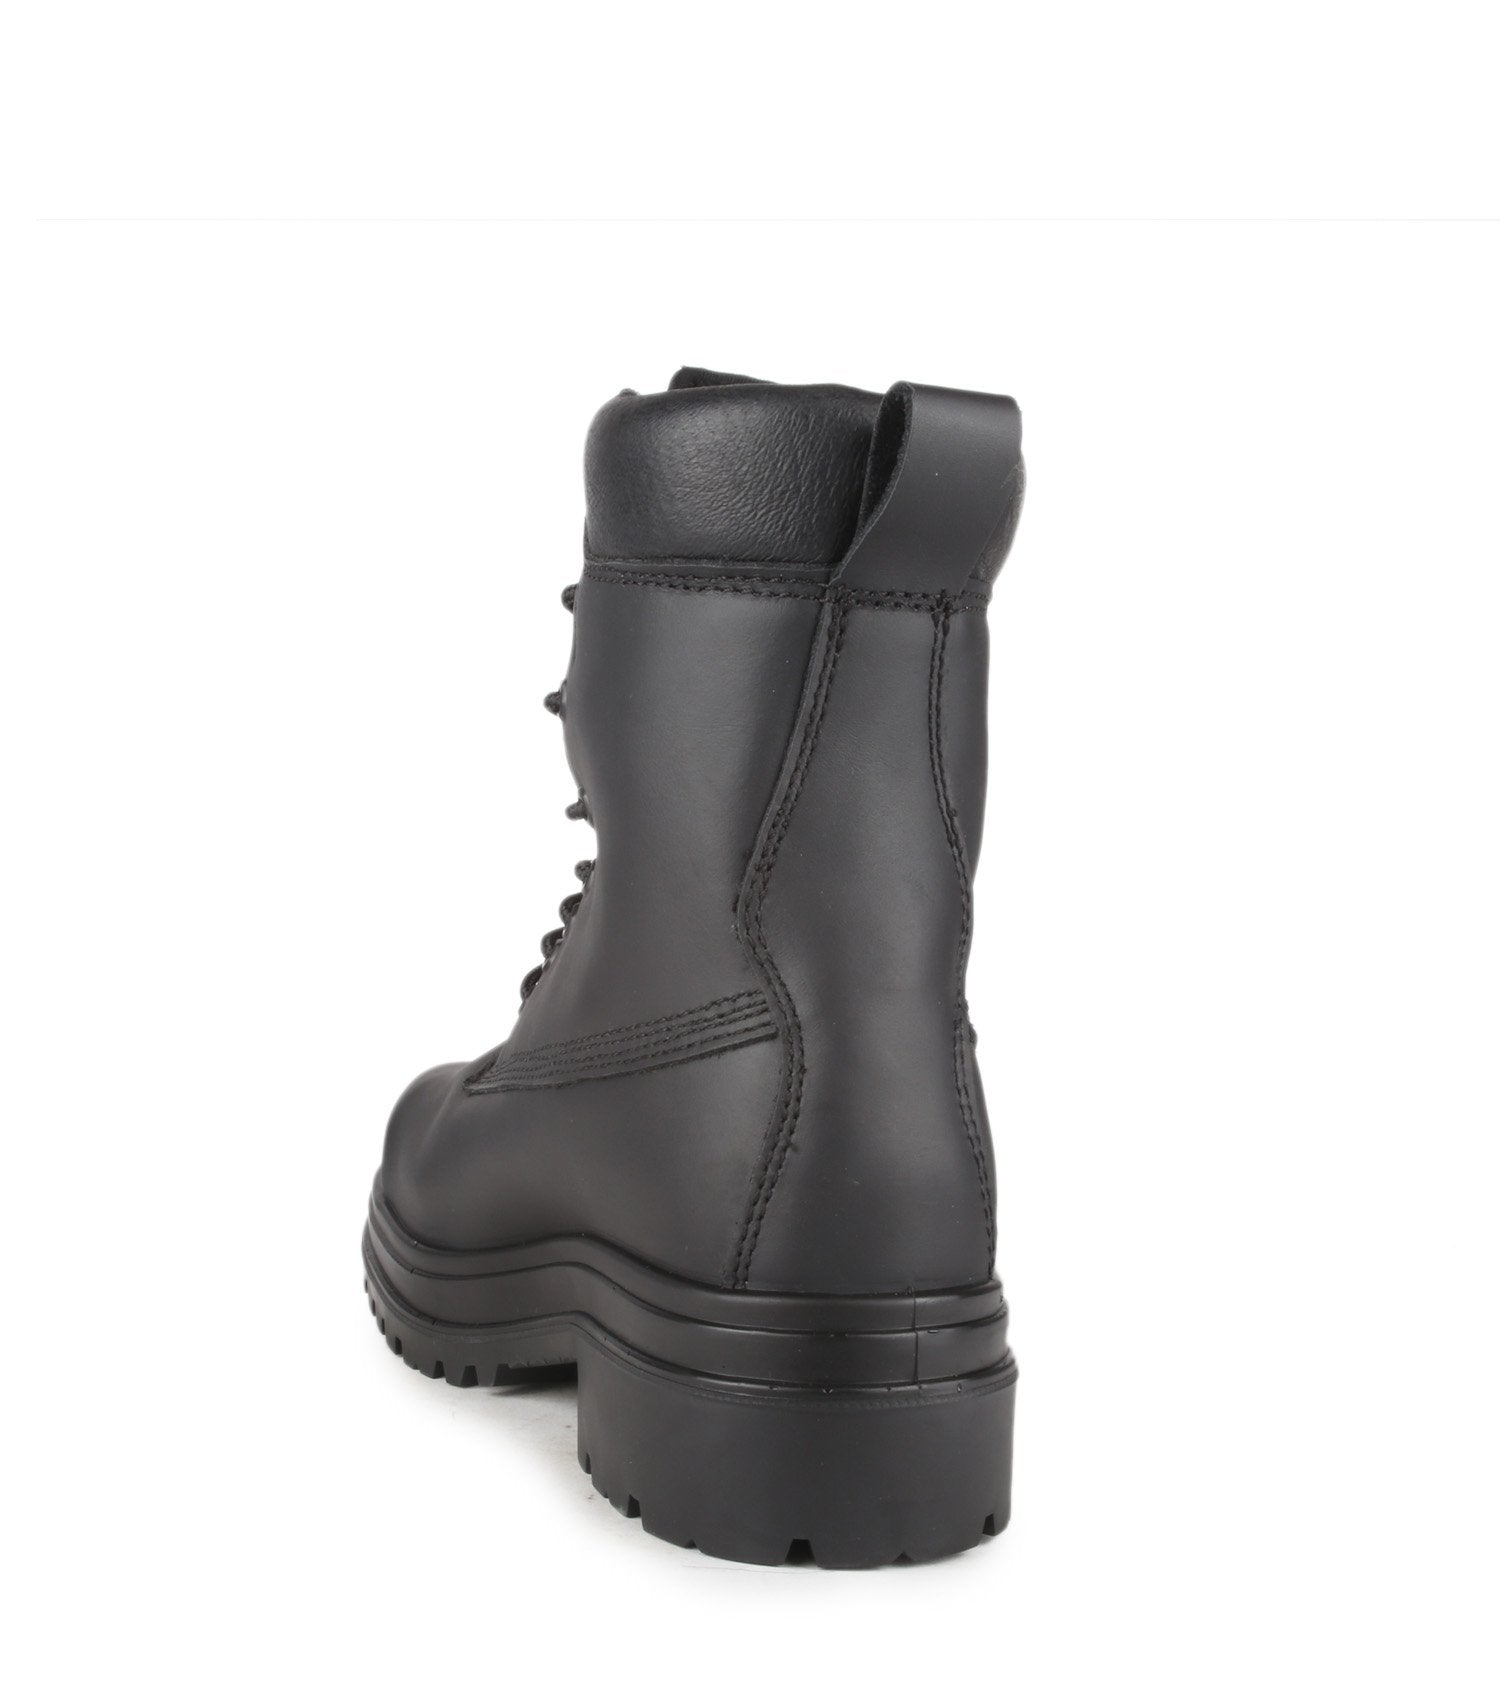 STC Alertz 8" Safety Boots w/ Zip Kit | Black | Sizes 6 - 14 Work Boots - Cleanflow